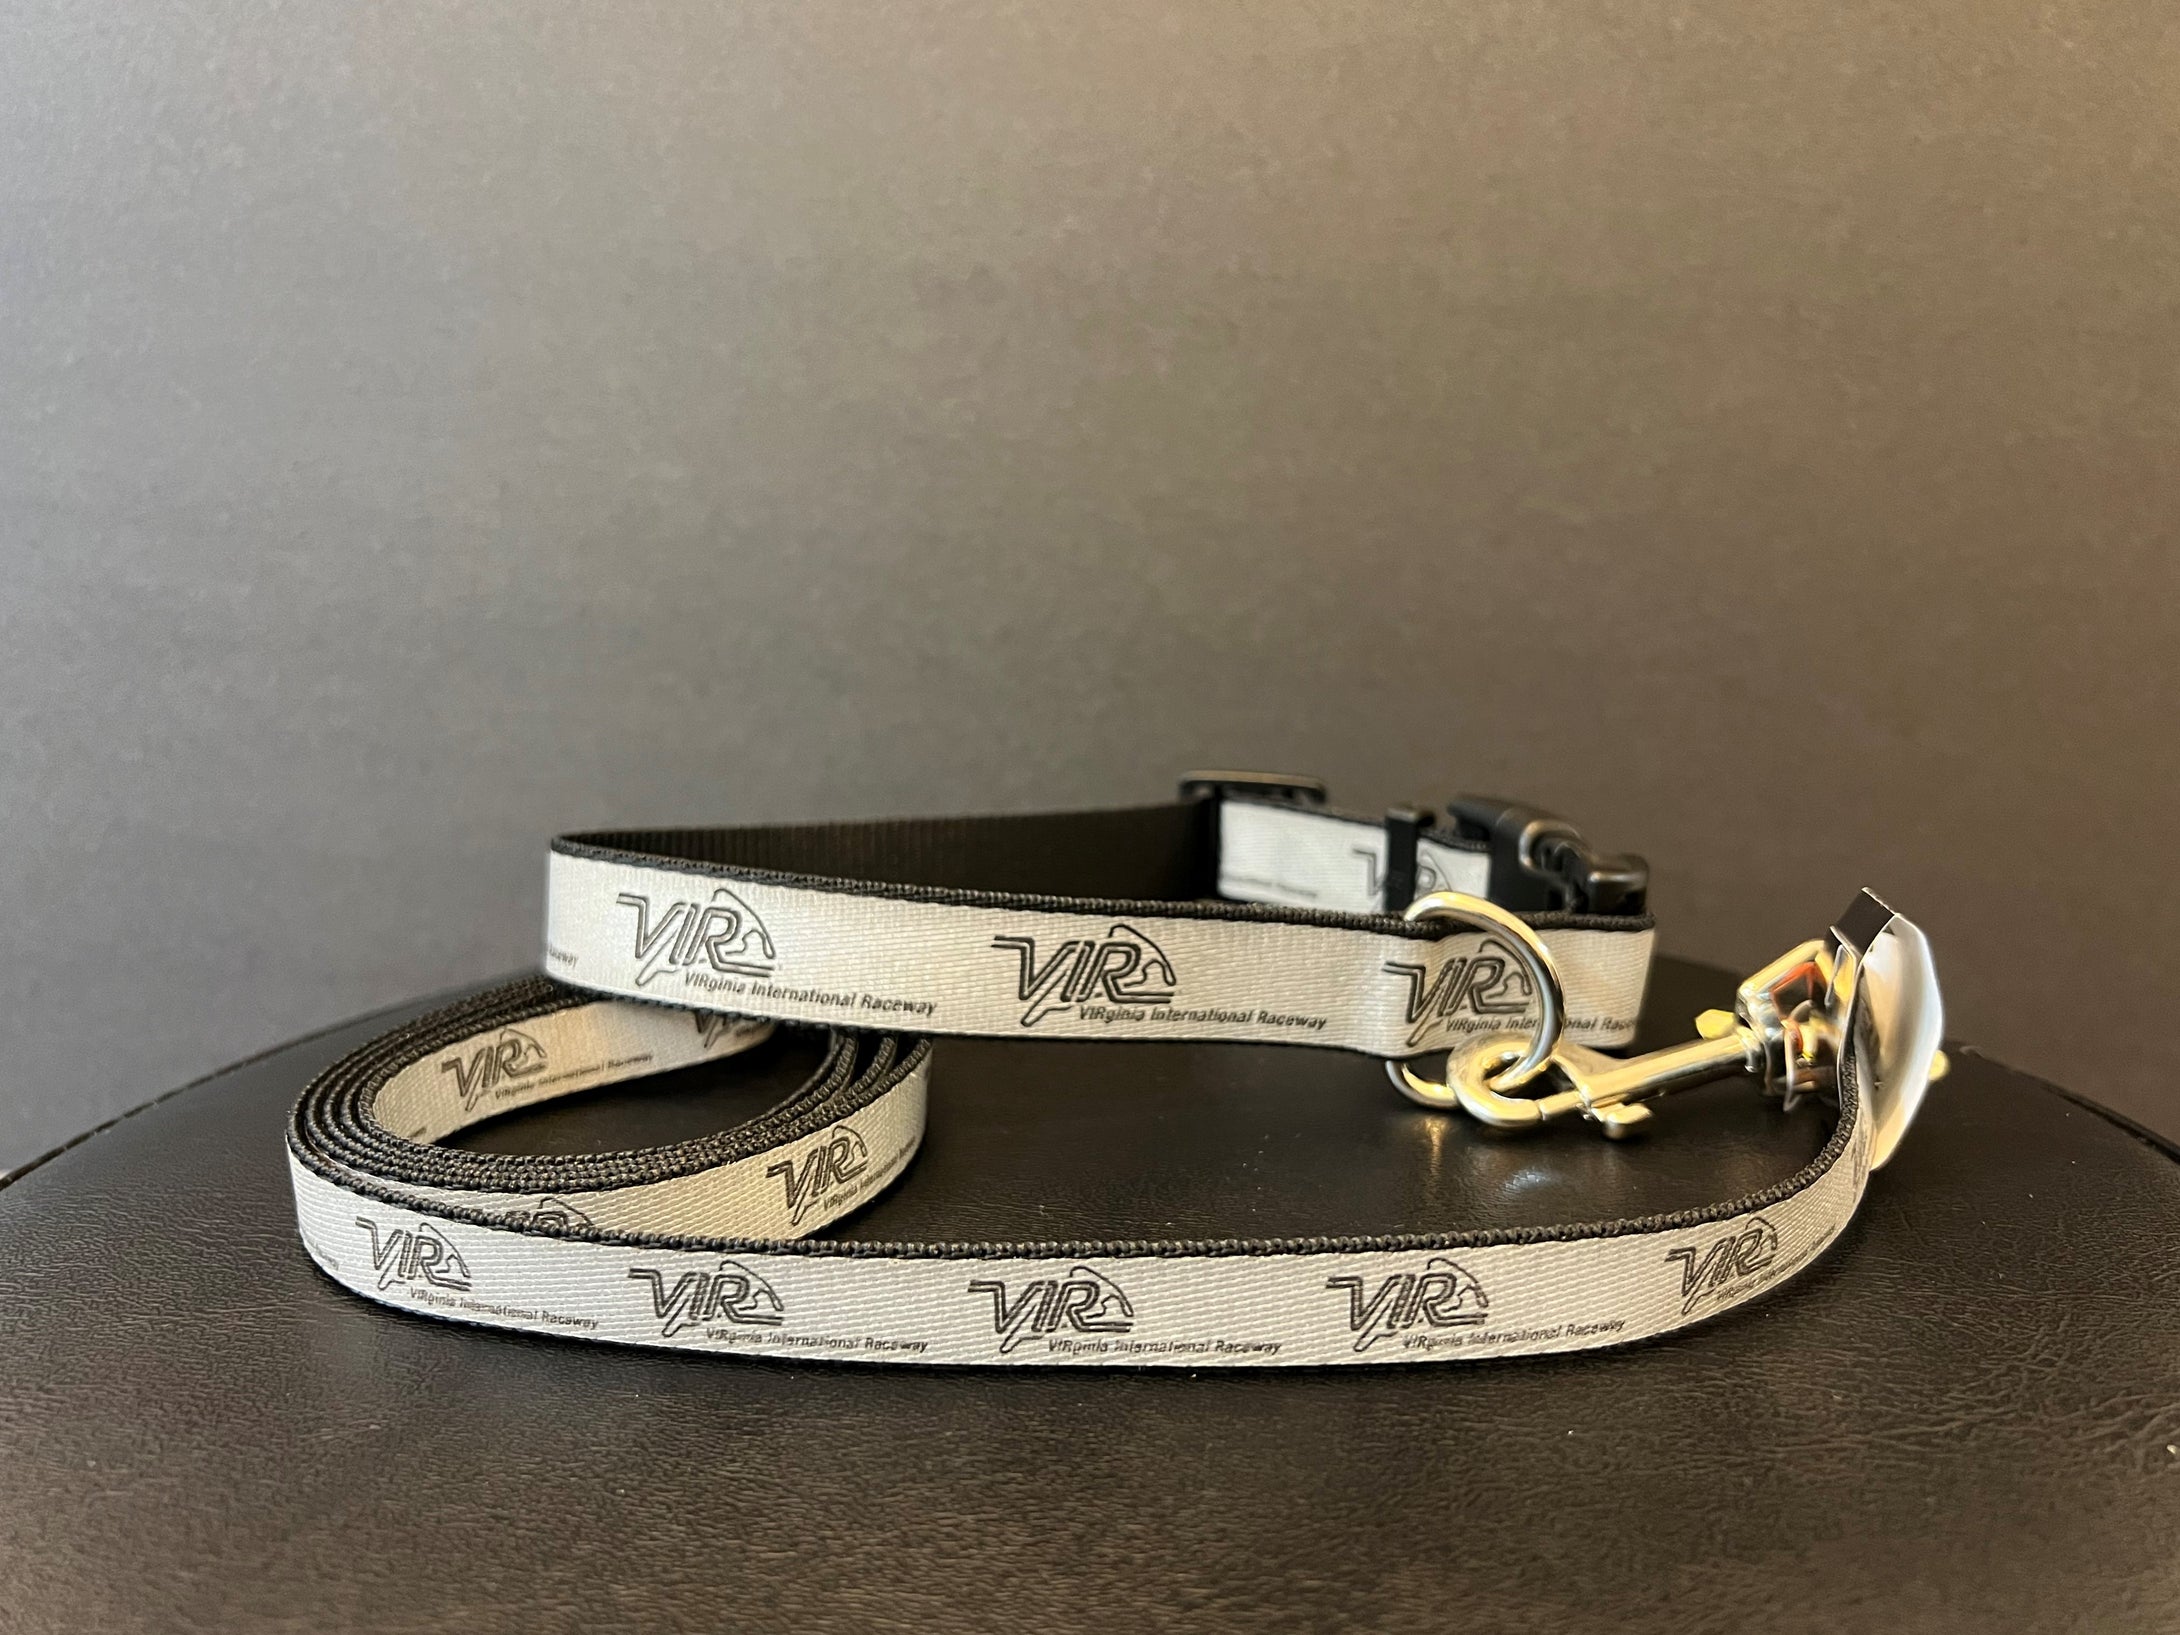 VIR Lazer Brite Dog Collar (Size: S, M or L)